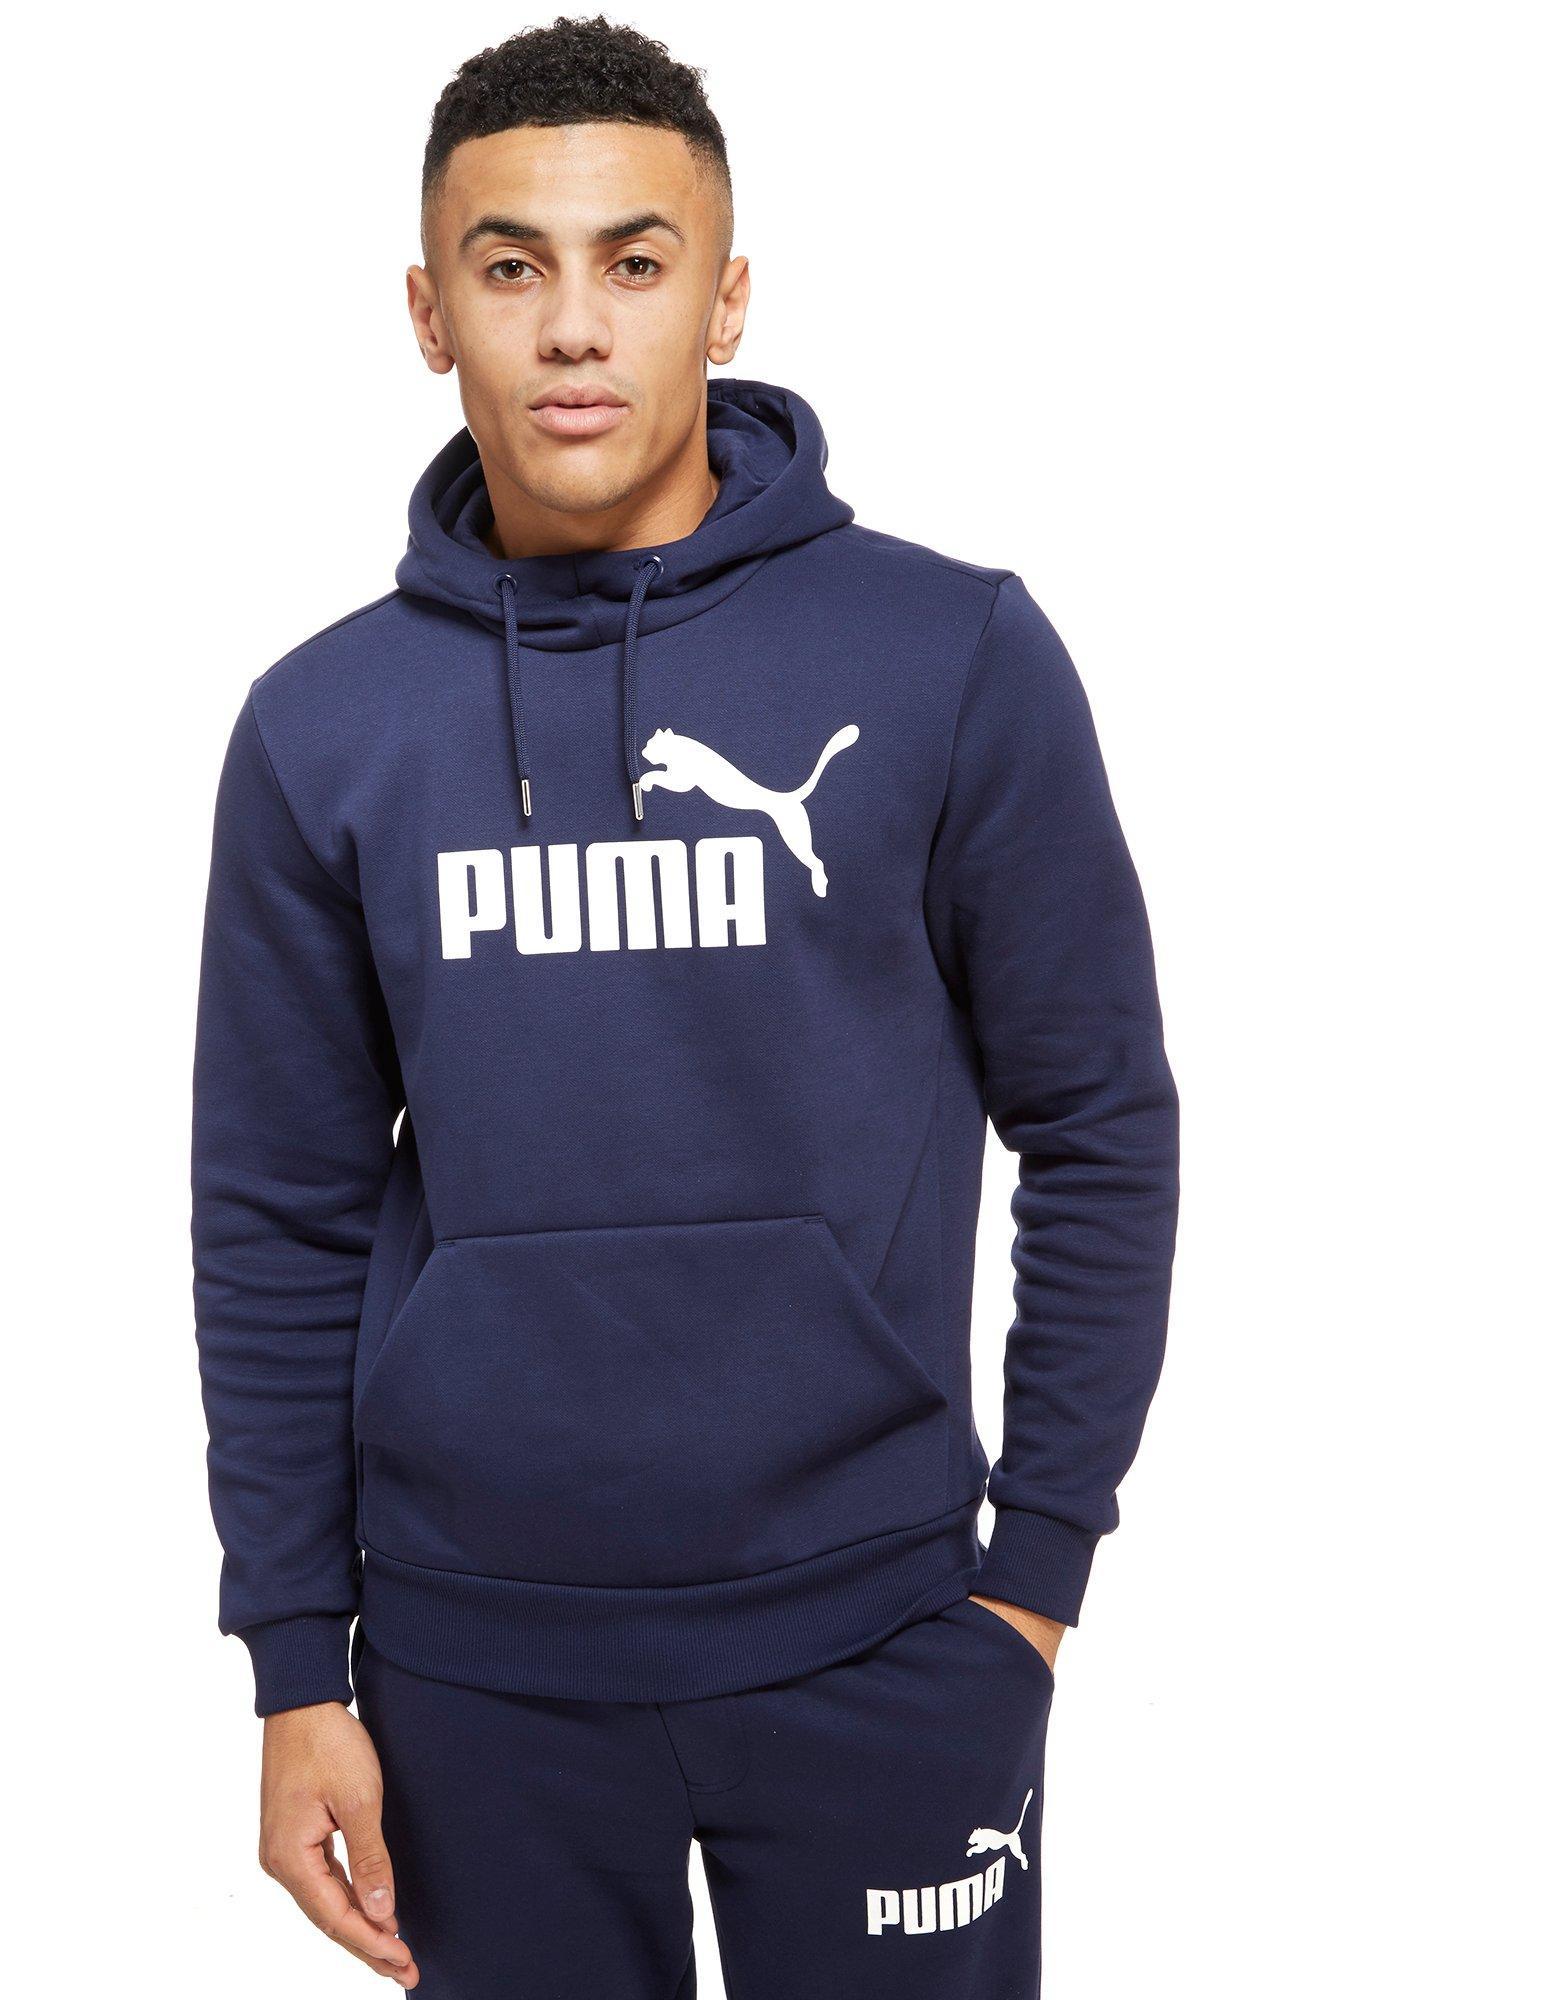 navy puma sweatshirt - 53% OFF 